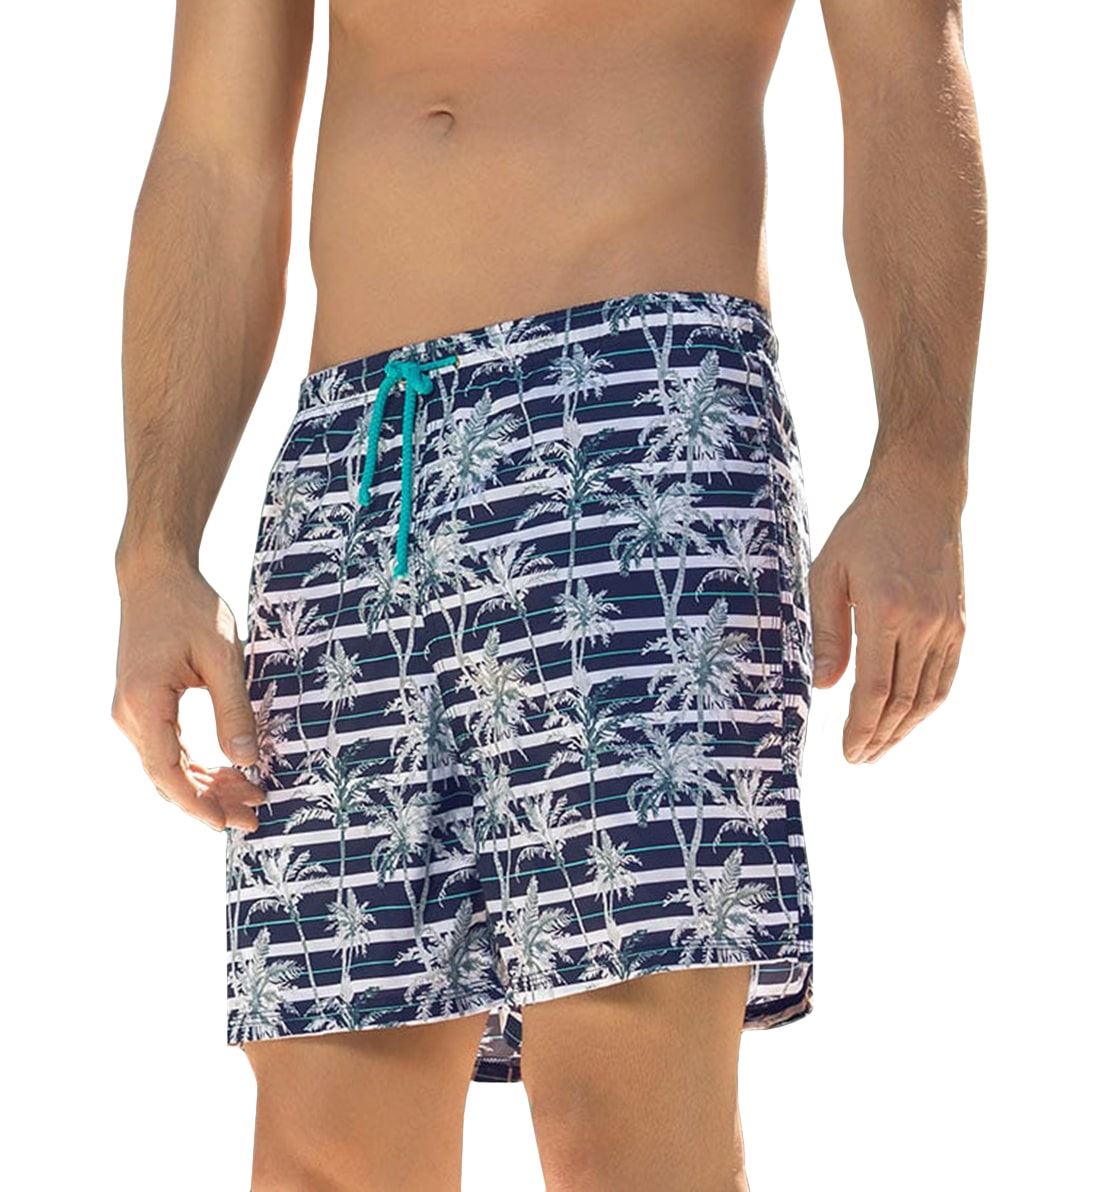 LEO Men's Printed Loose Fit Swim Trunk (505023)- Palm Trees Blue